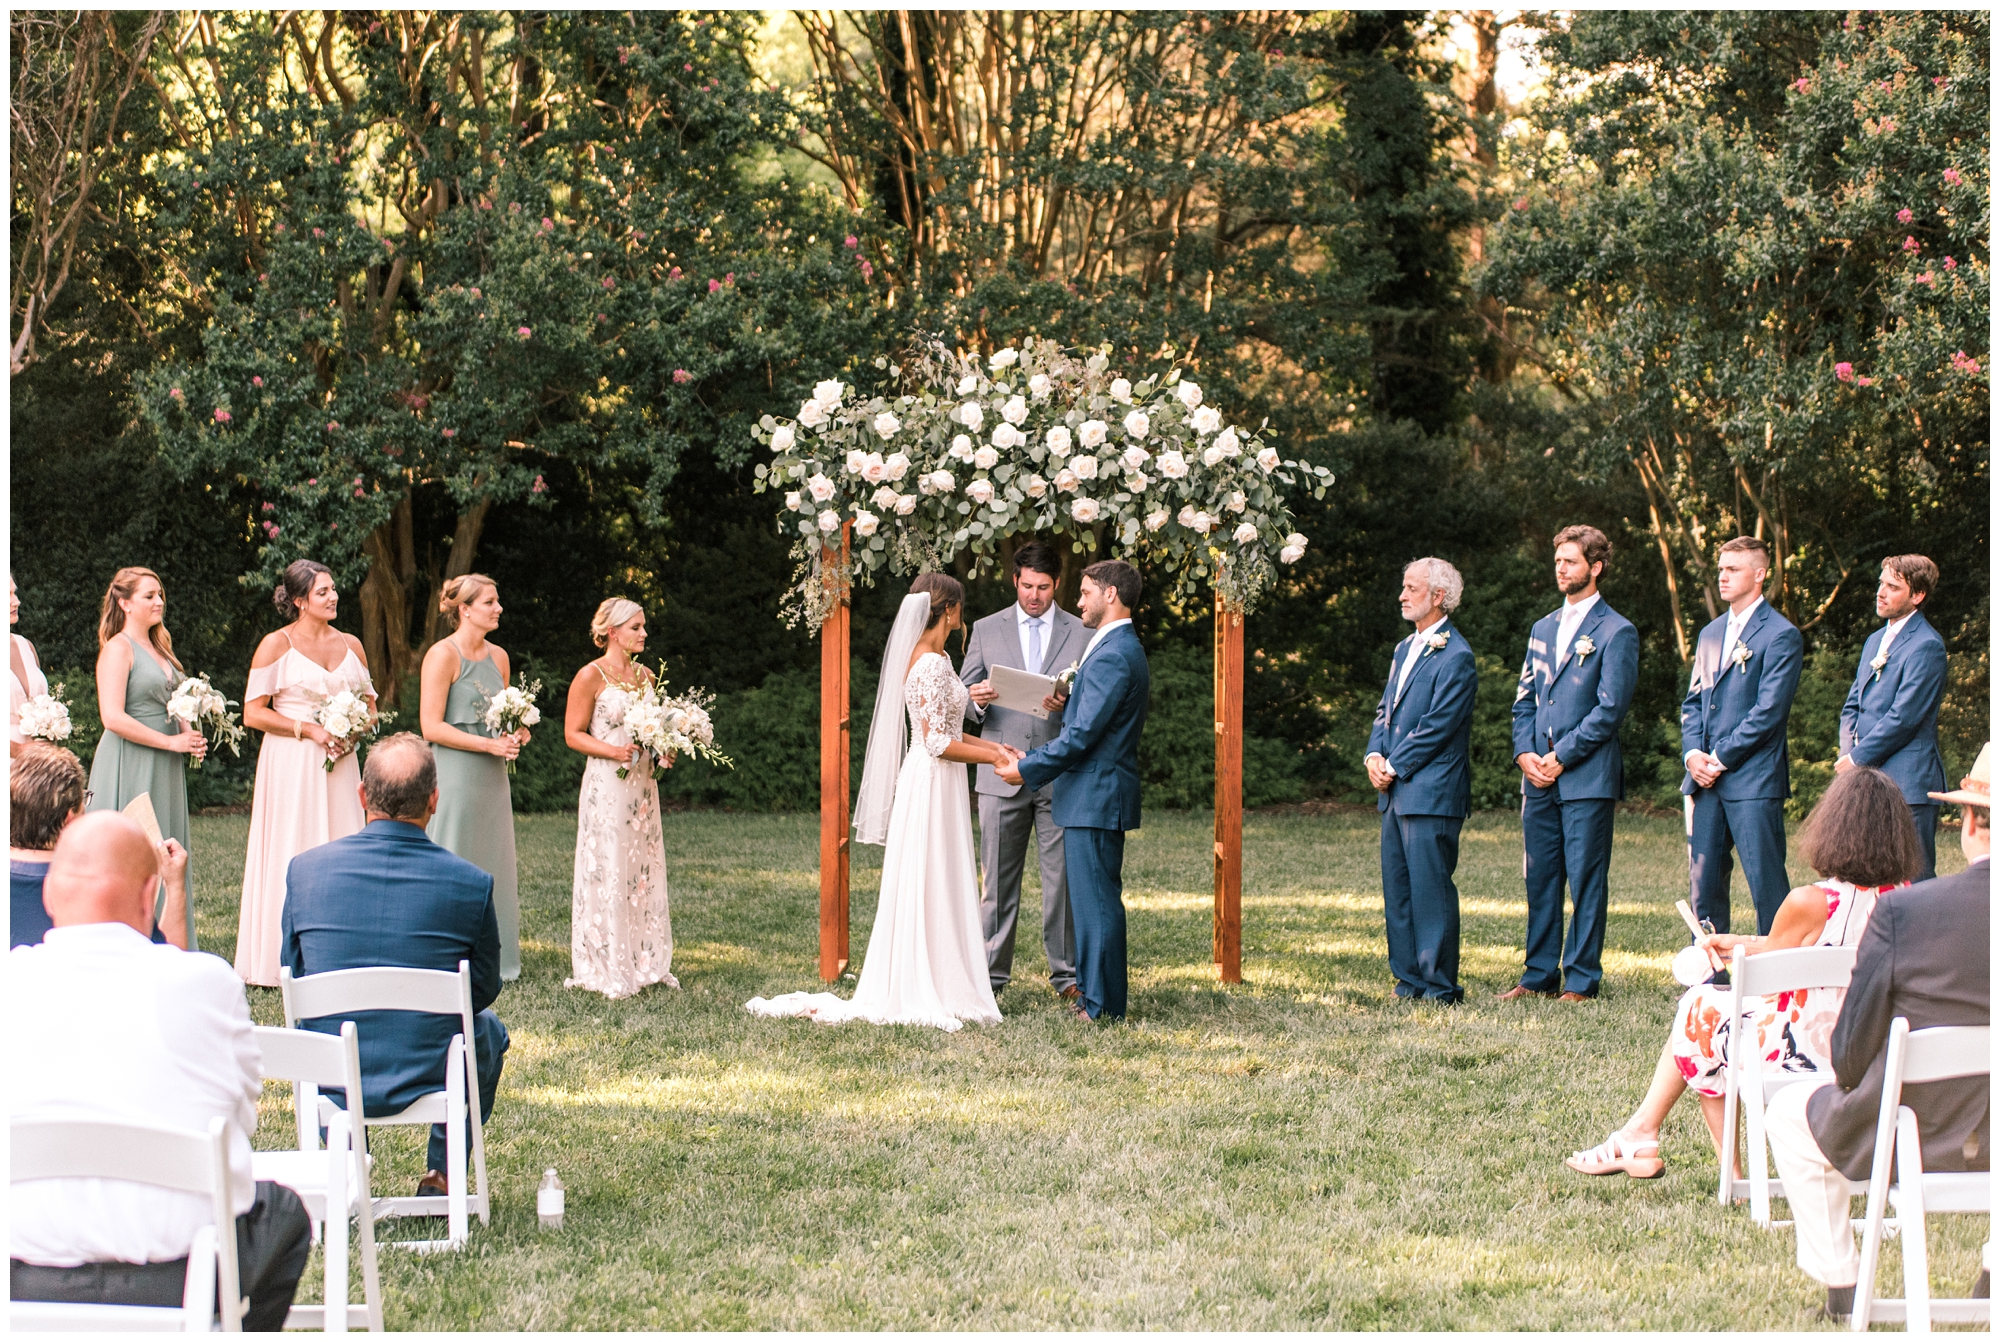 Richmond Backyard Wedding Ceremony with floral arch